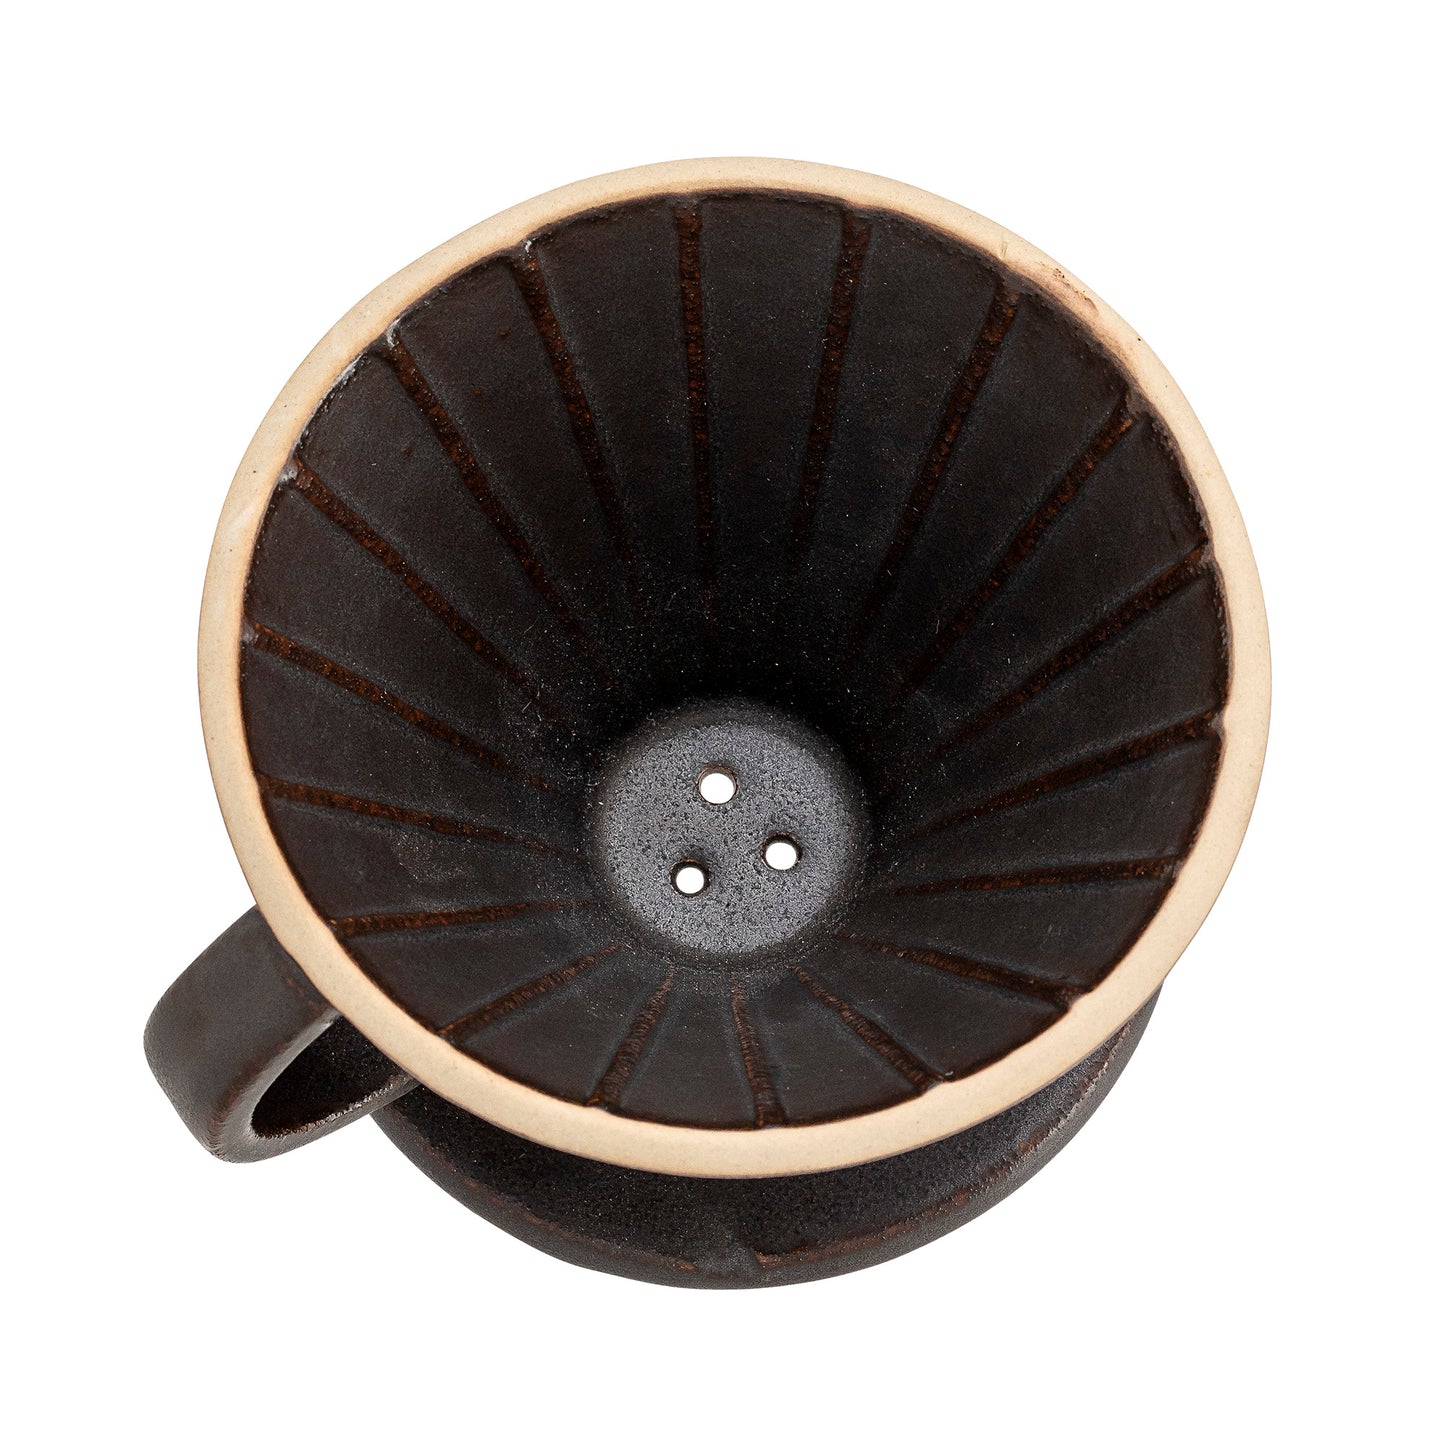 Reusable coffee strainer